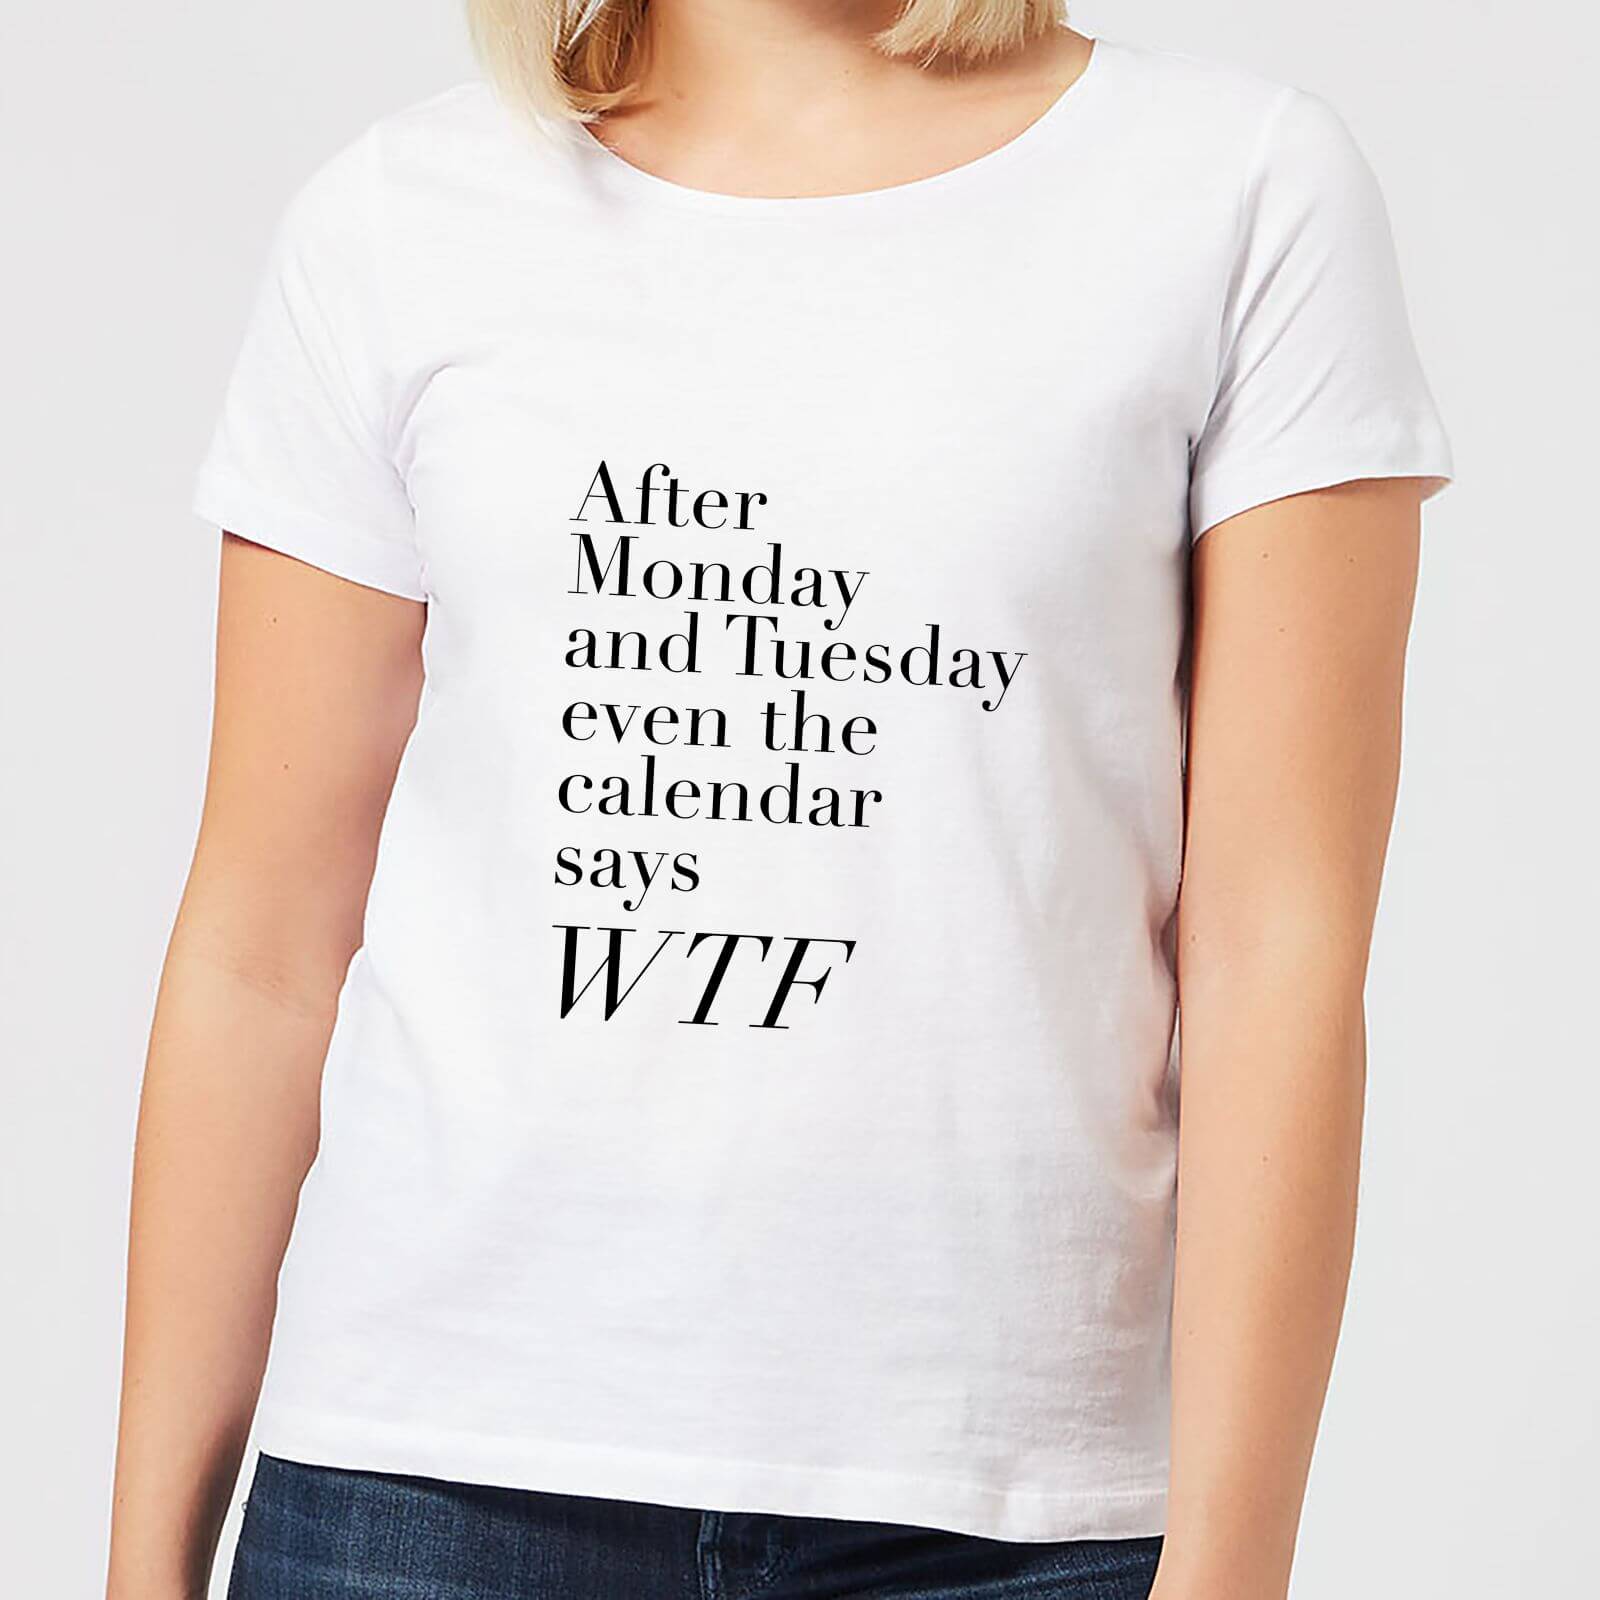 Even The Calendar Says WTF Women's T-Shirt - White - S - White